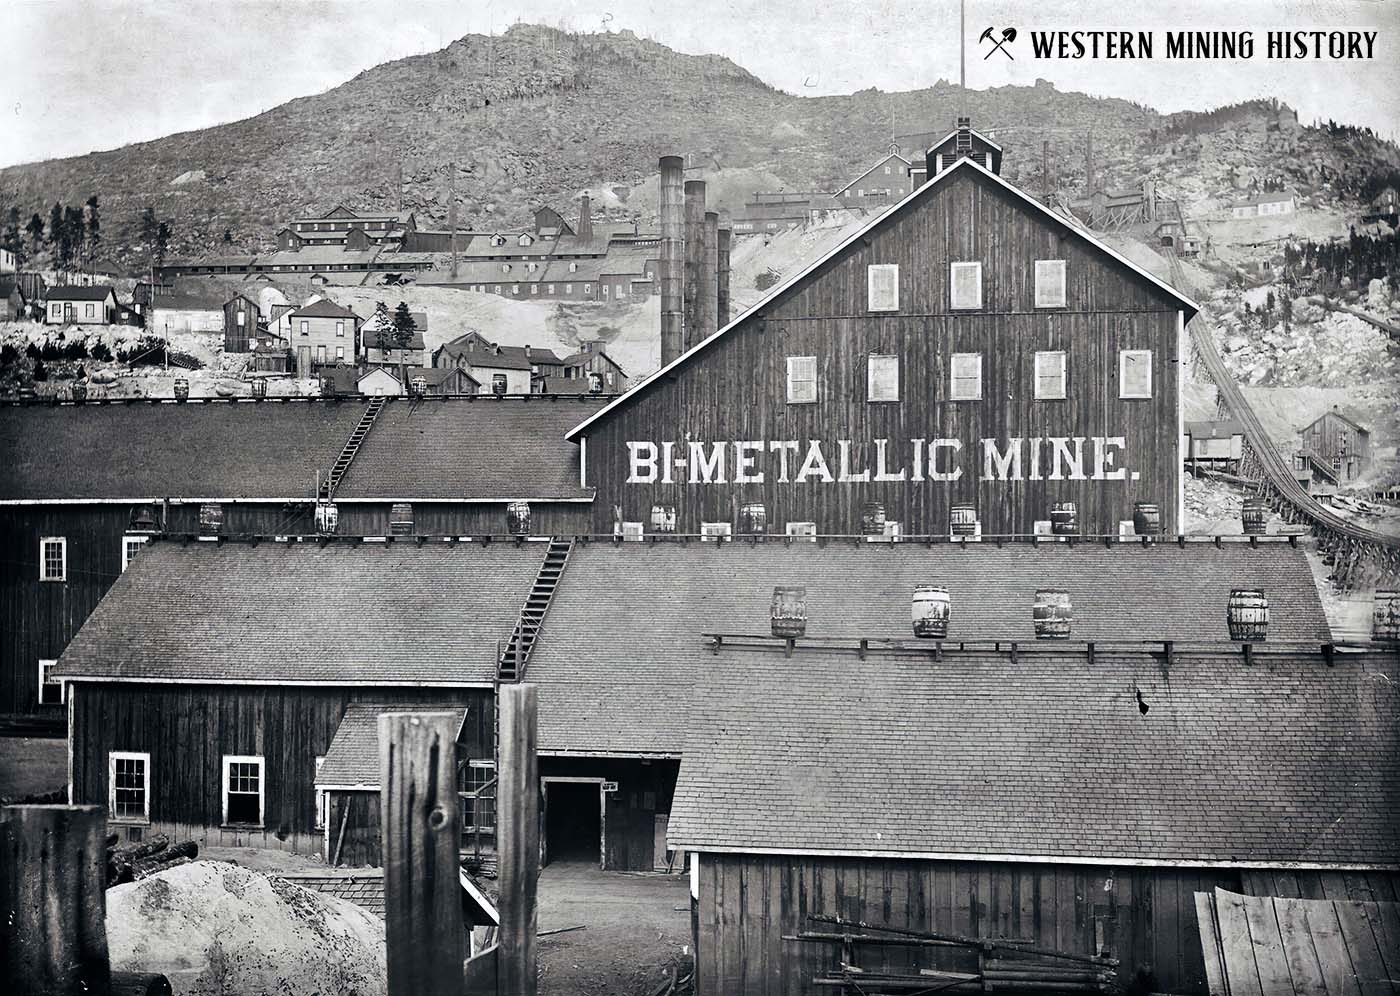 Bi-Metallic shaft house at Granite, Montana ca. 1890-1892